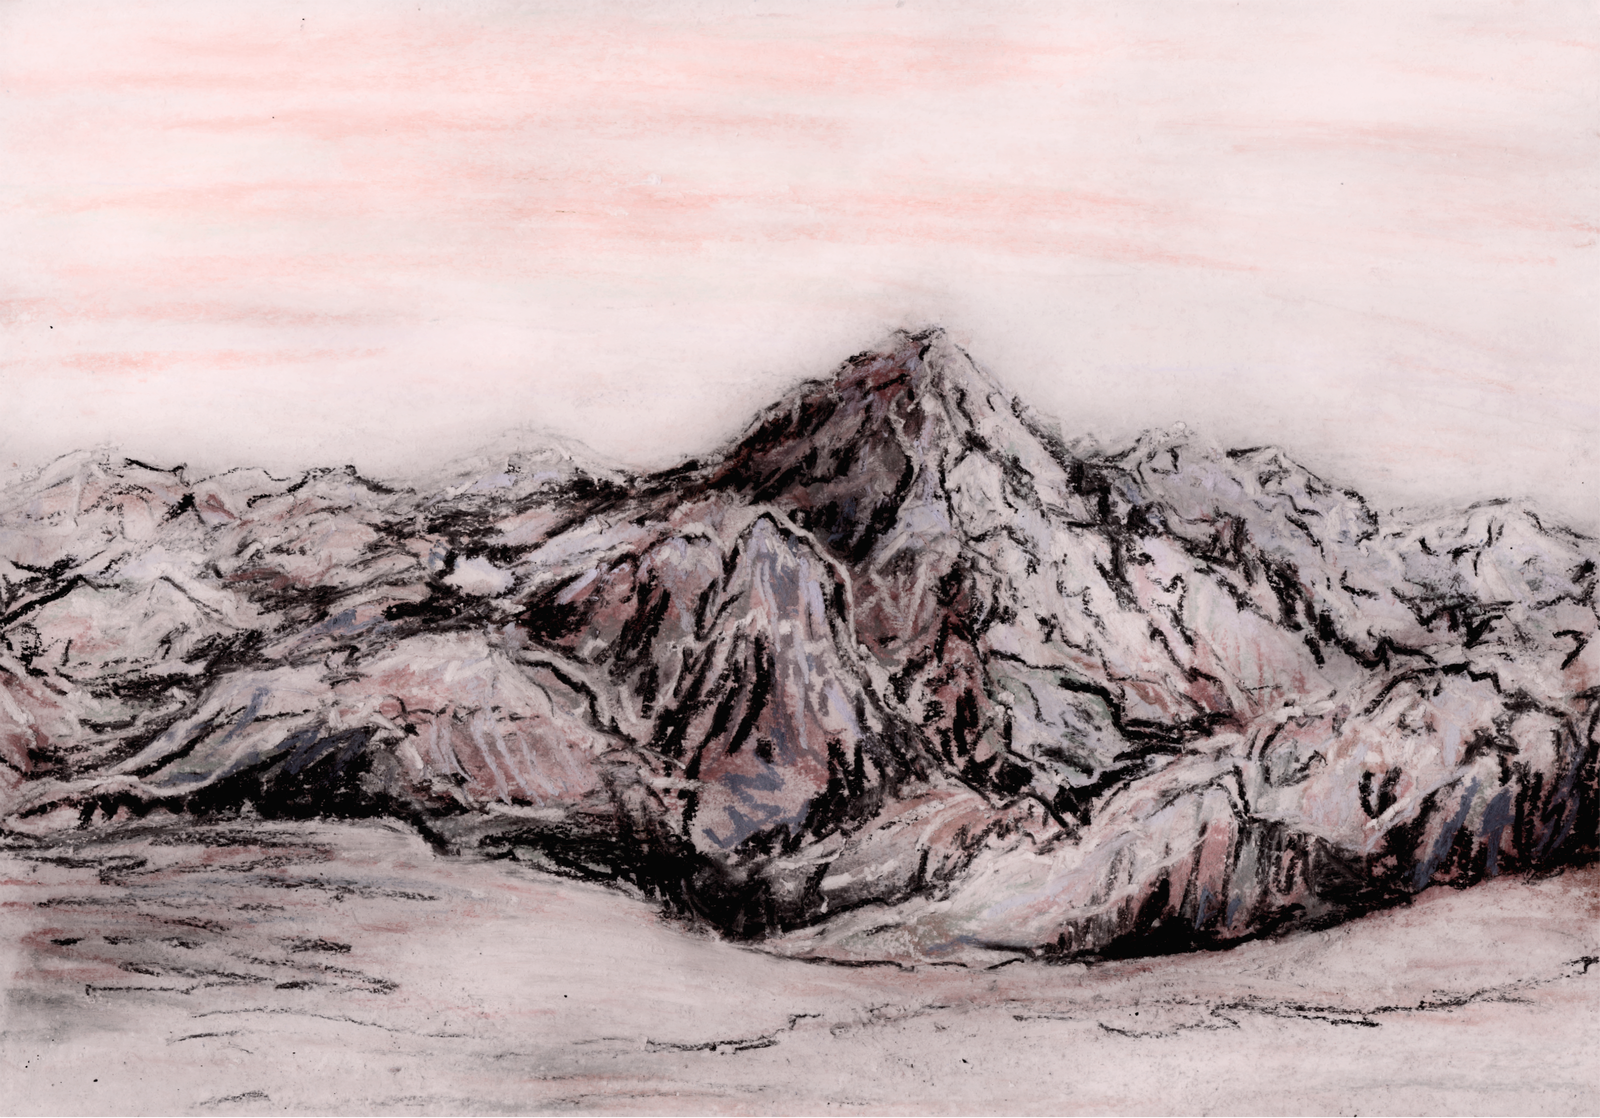 La montaa sagrada (The sacred mountain) - Photoshop, My, Dream, The mountains, Postcard, Pastel crayons, 